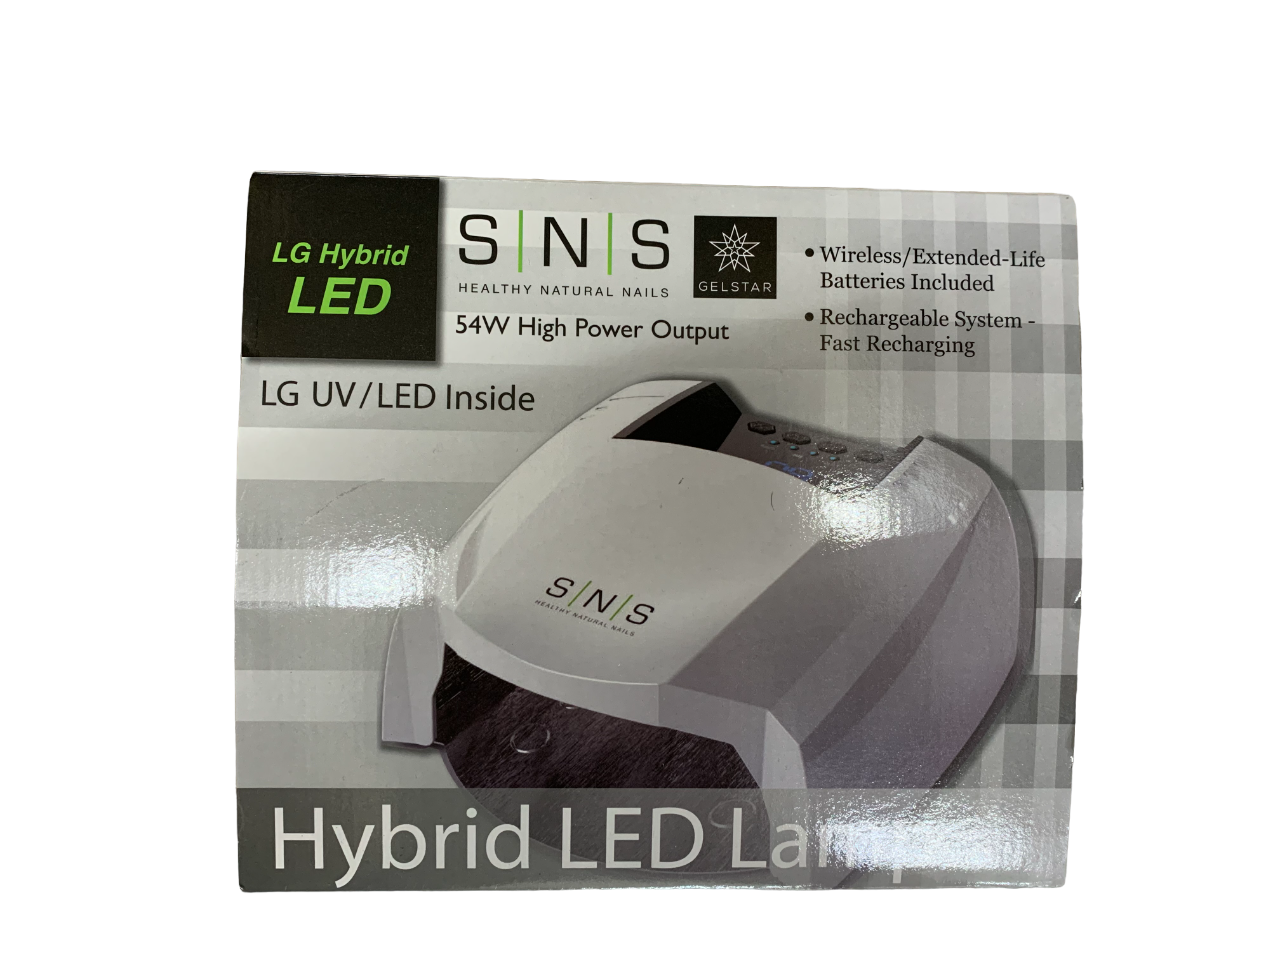 SNS LG Hybrid LED Lamp